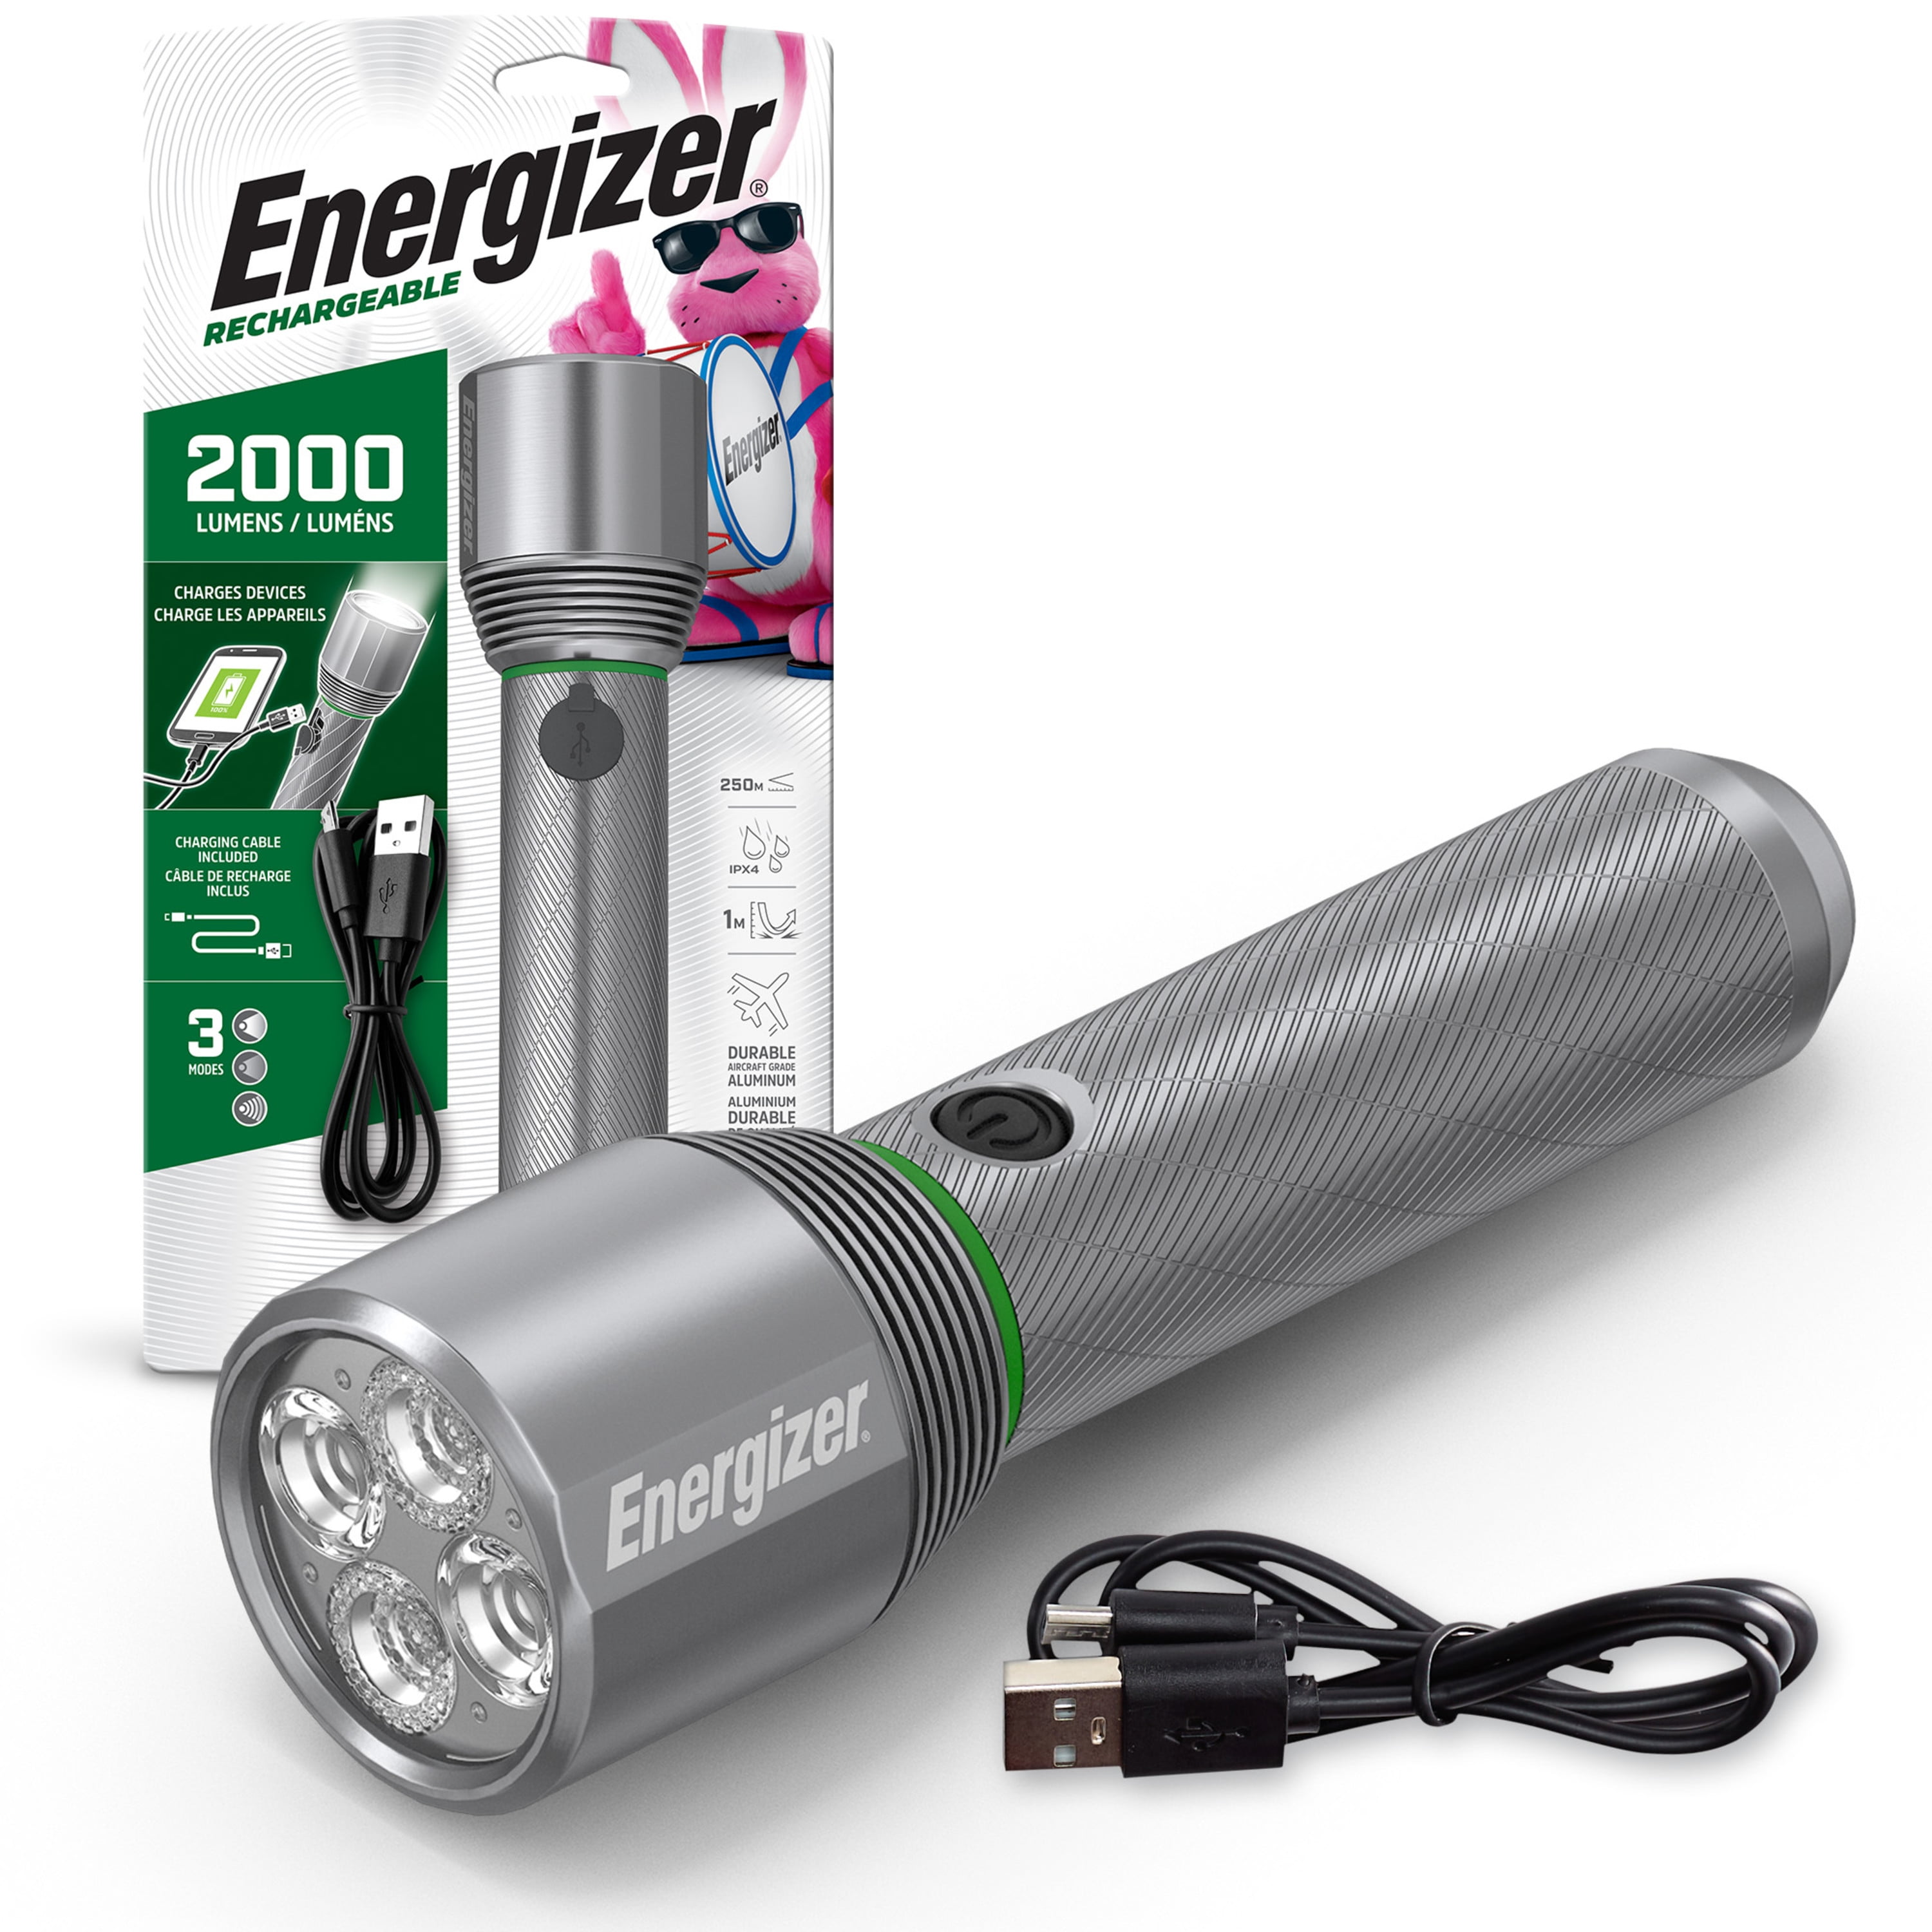 Energizer Rechargeable LED Flashlight with USB Charging Port, 2000 Lumen -